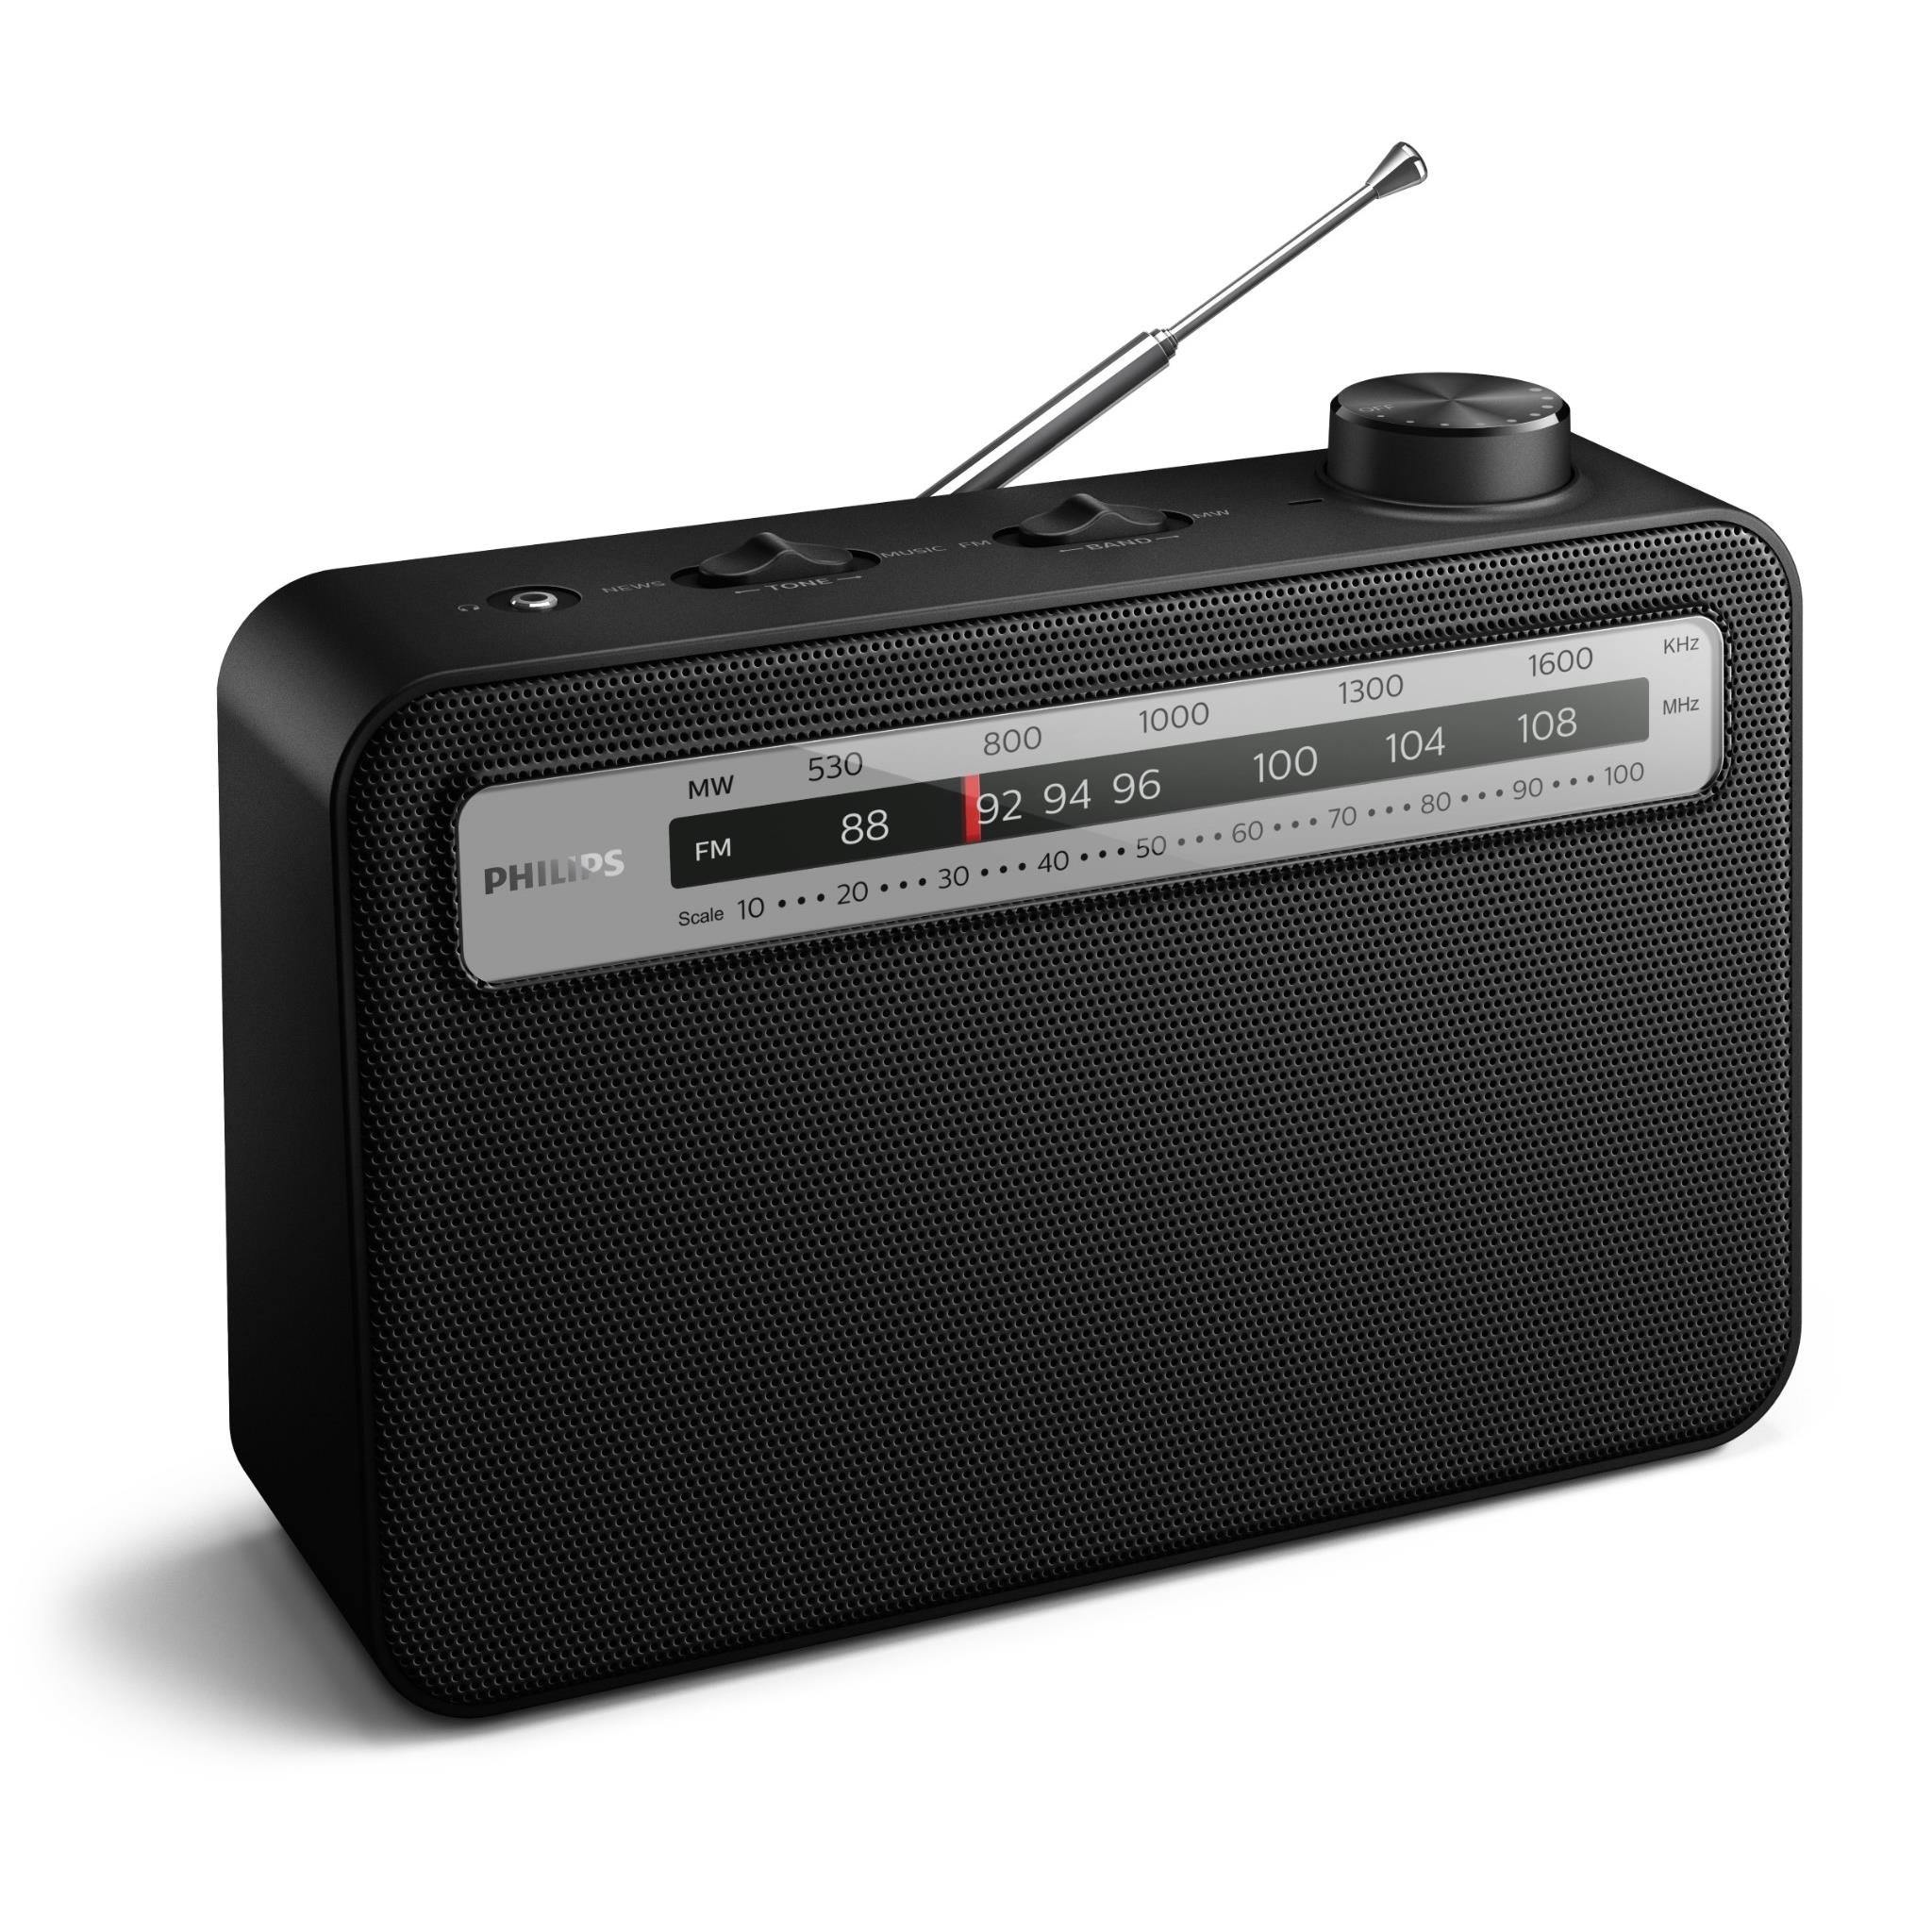 philips tar2506/79 portable fm/mw radio